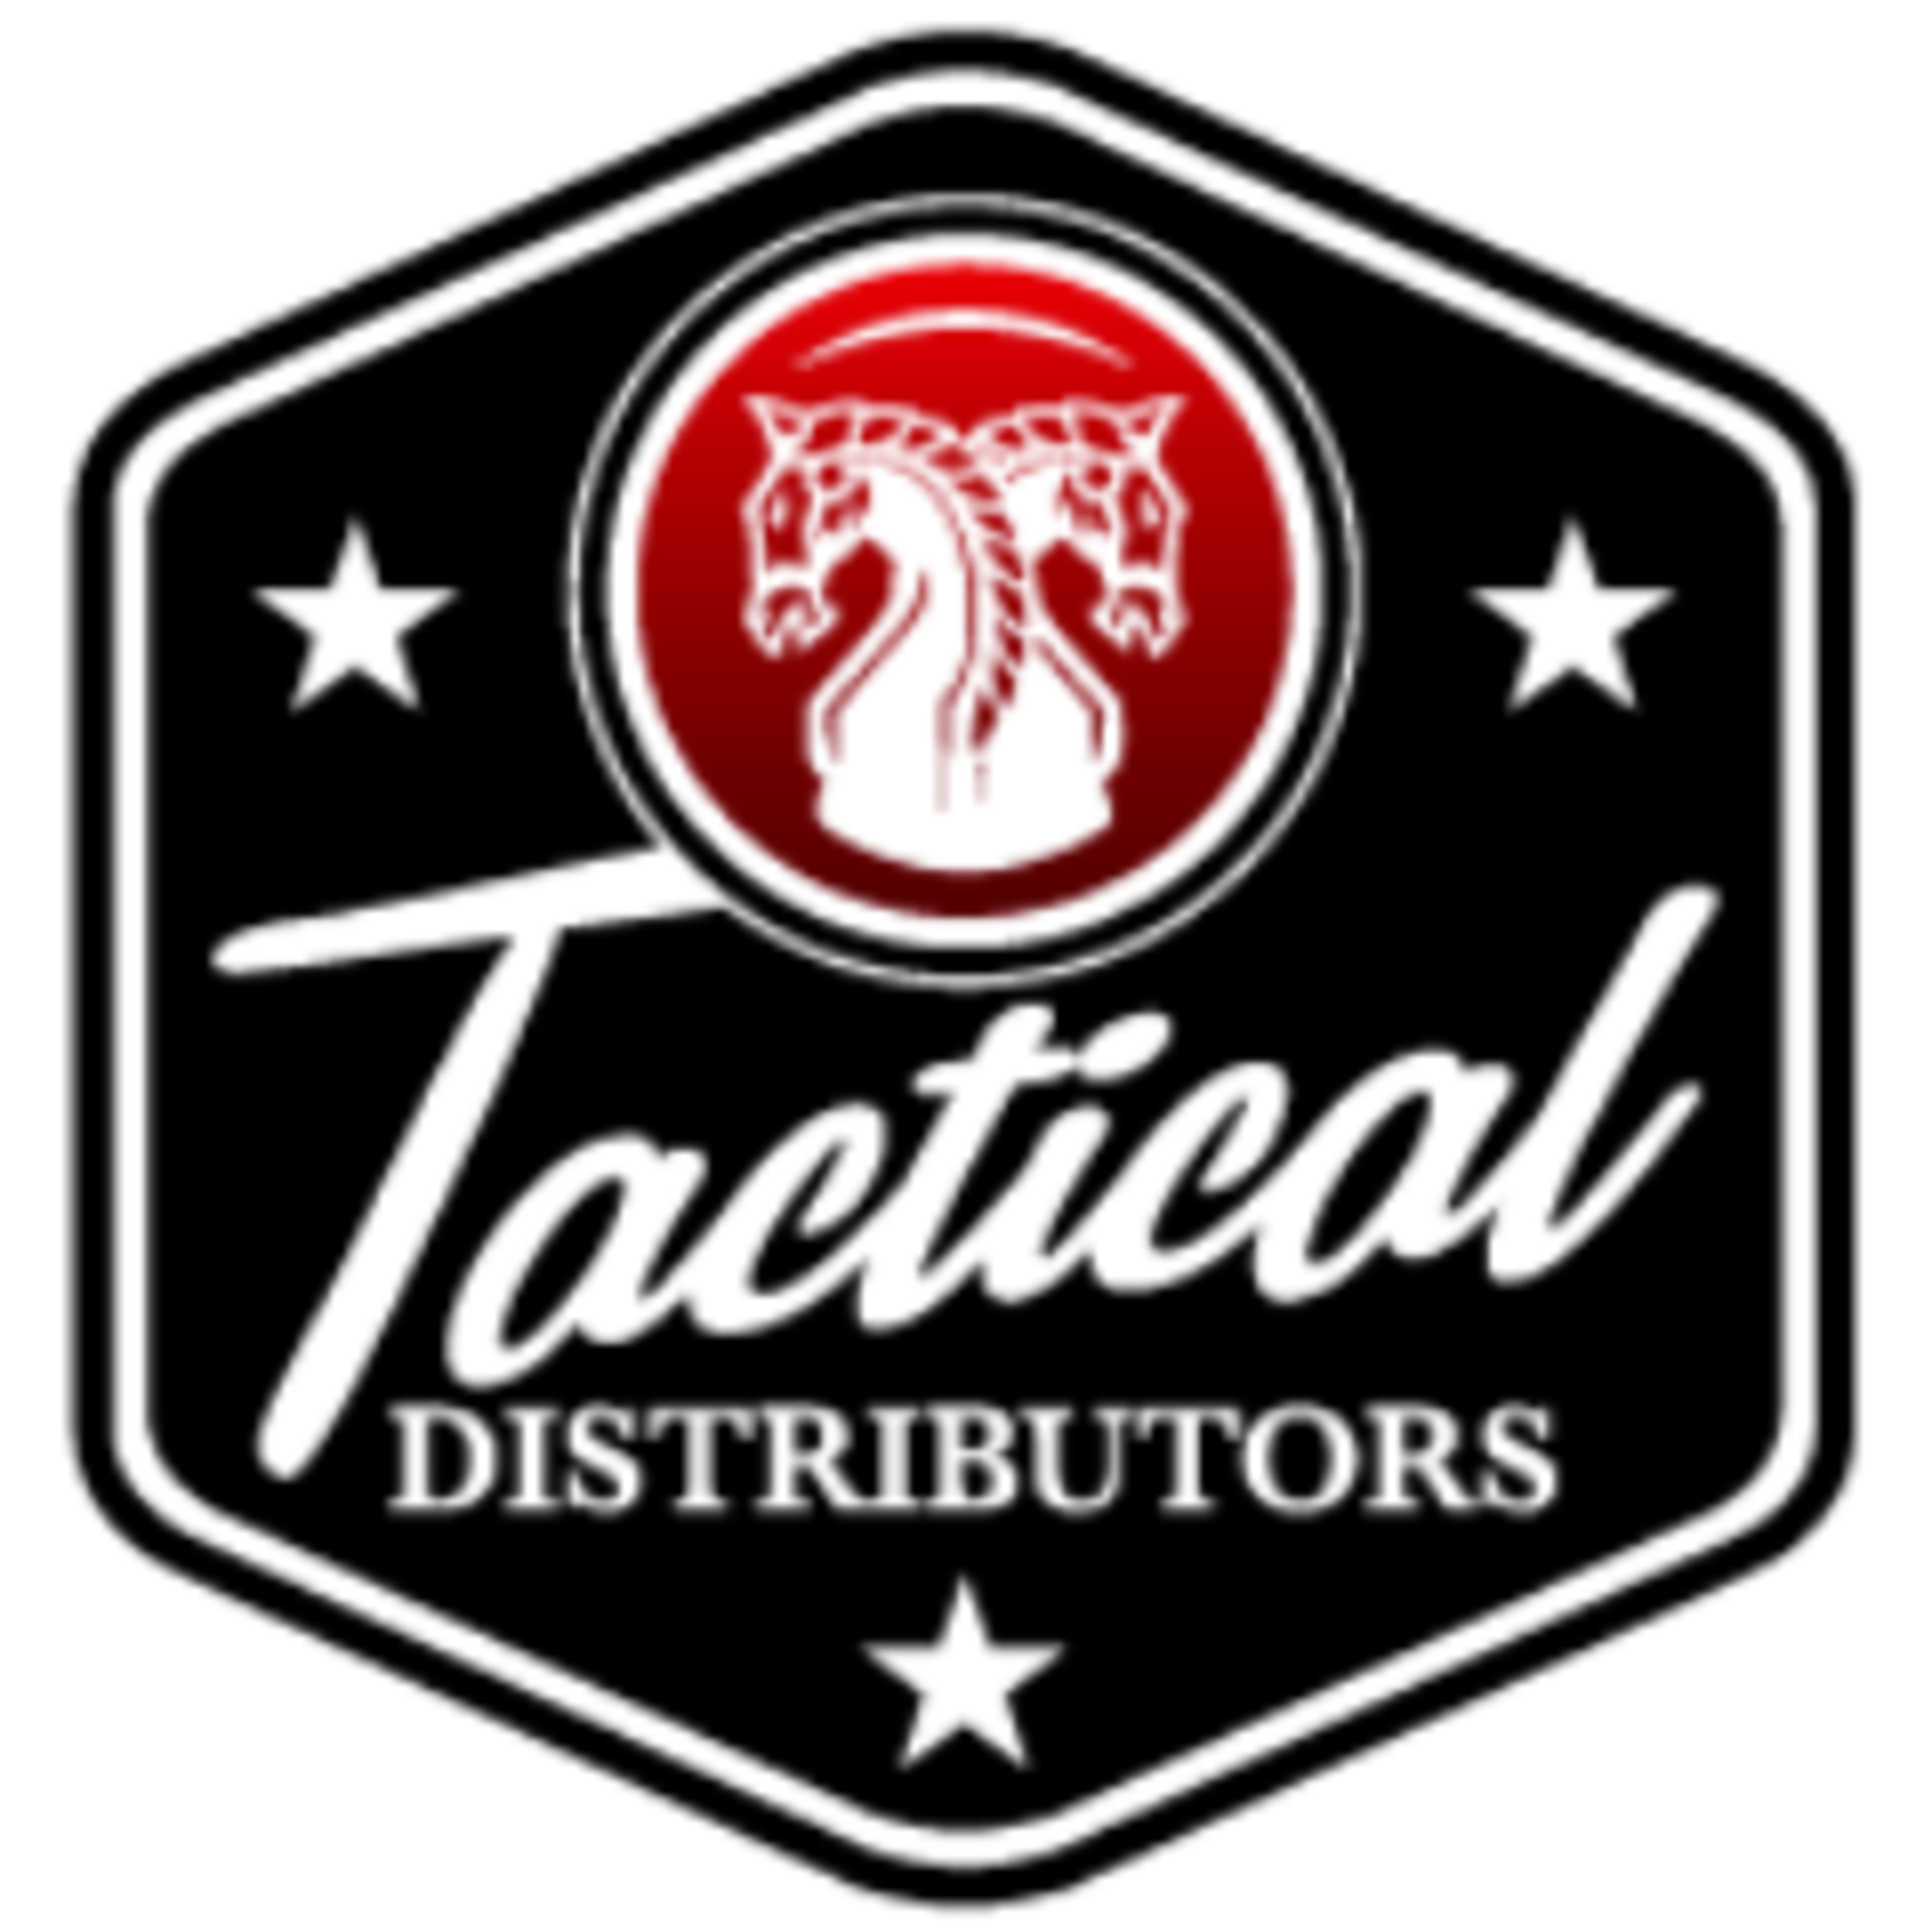 Tactical DistributorsCode